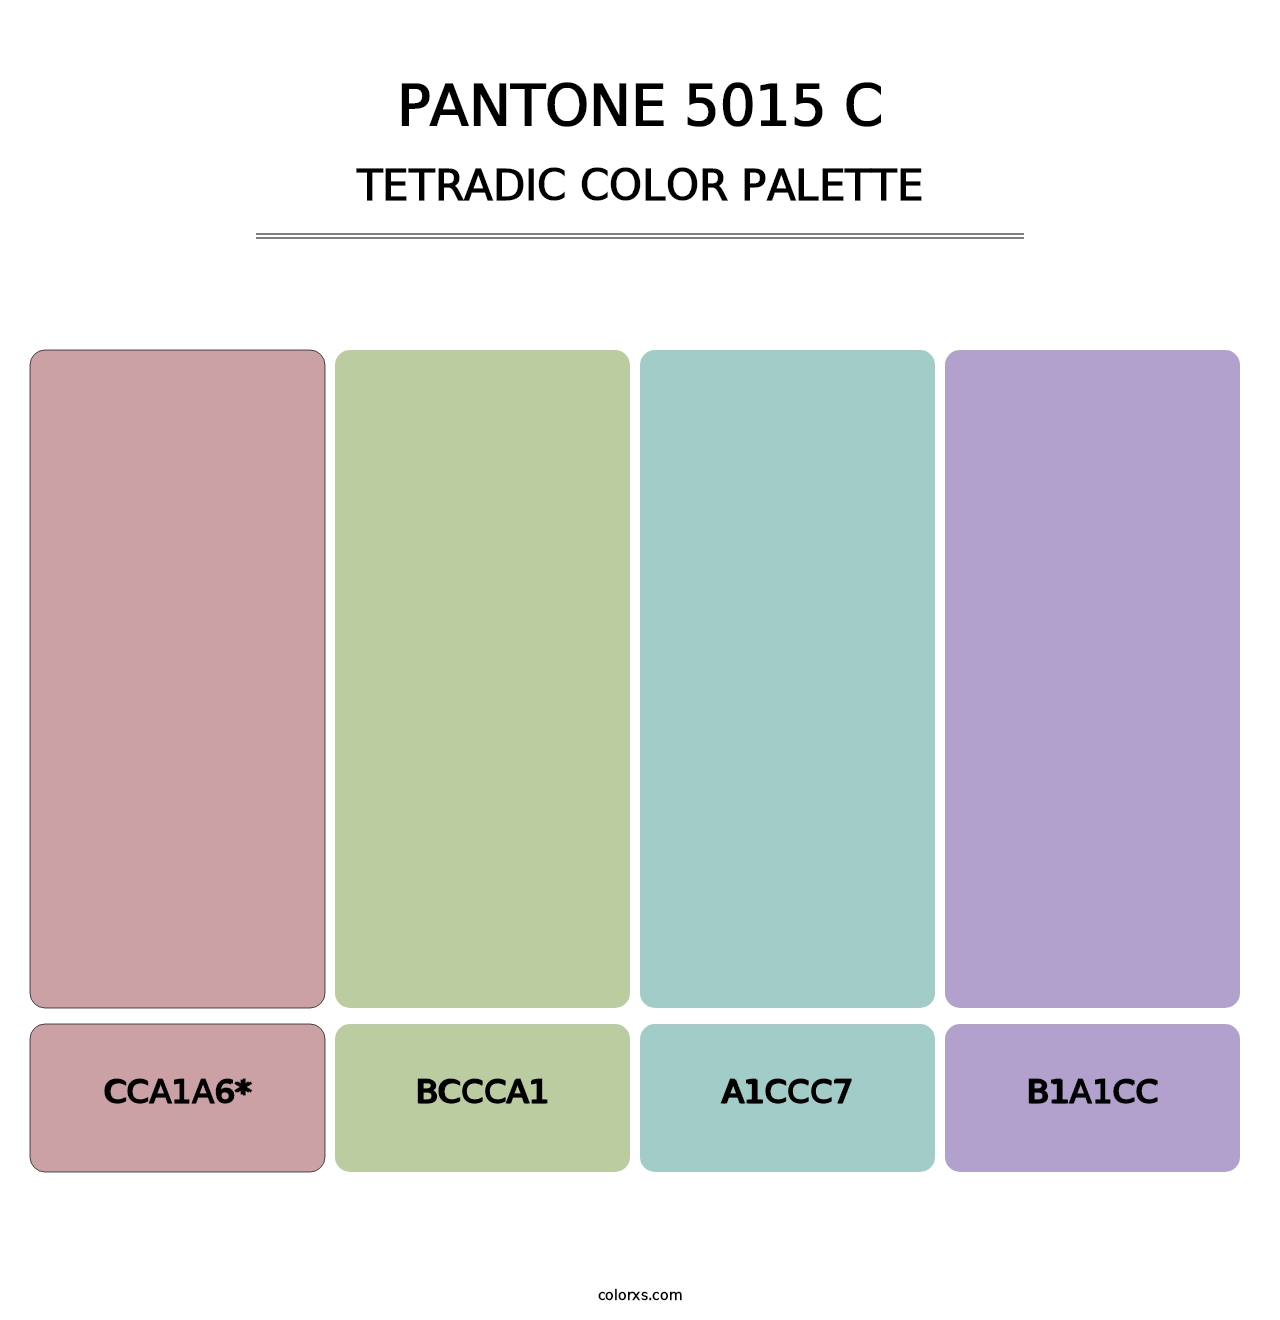 PANTONE 5015 C - Tetradic Color Palette